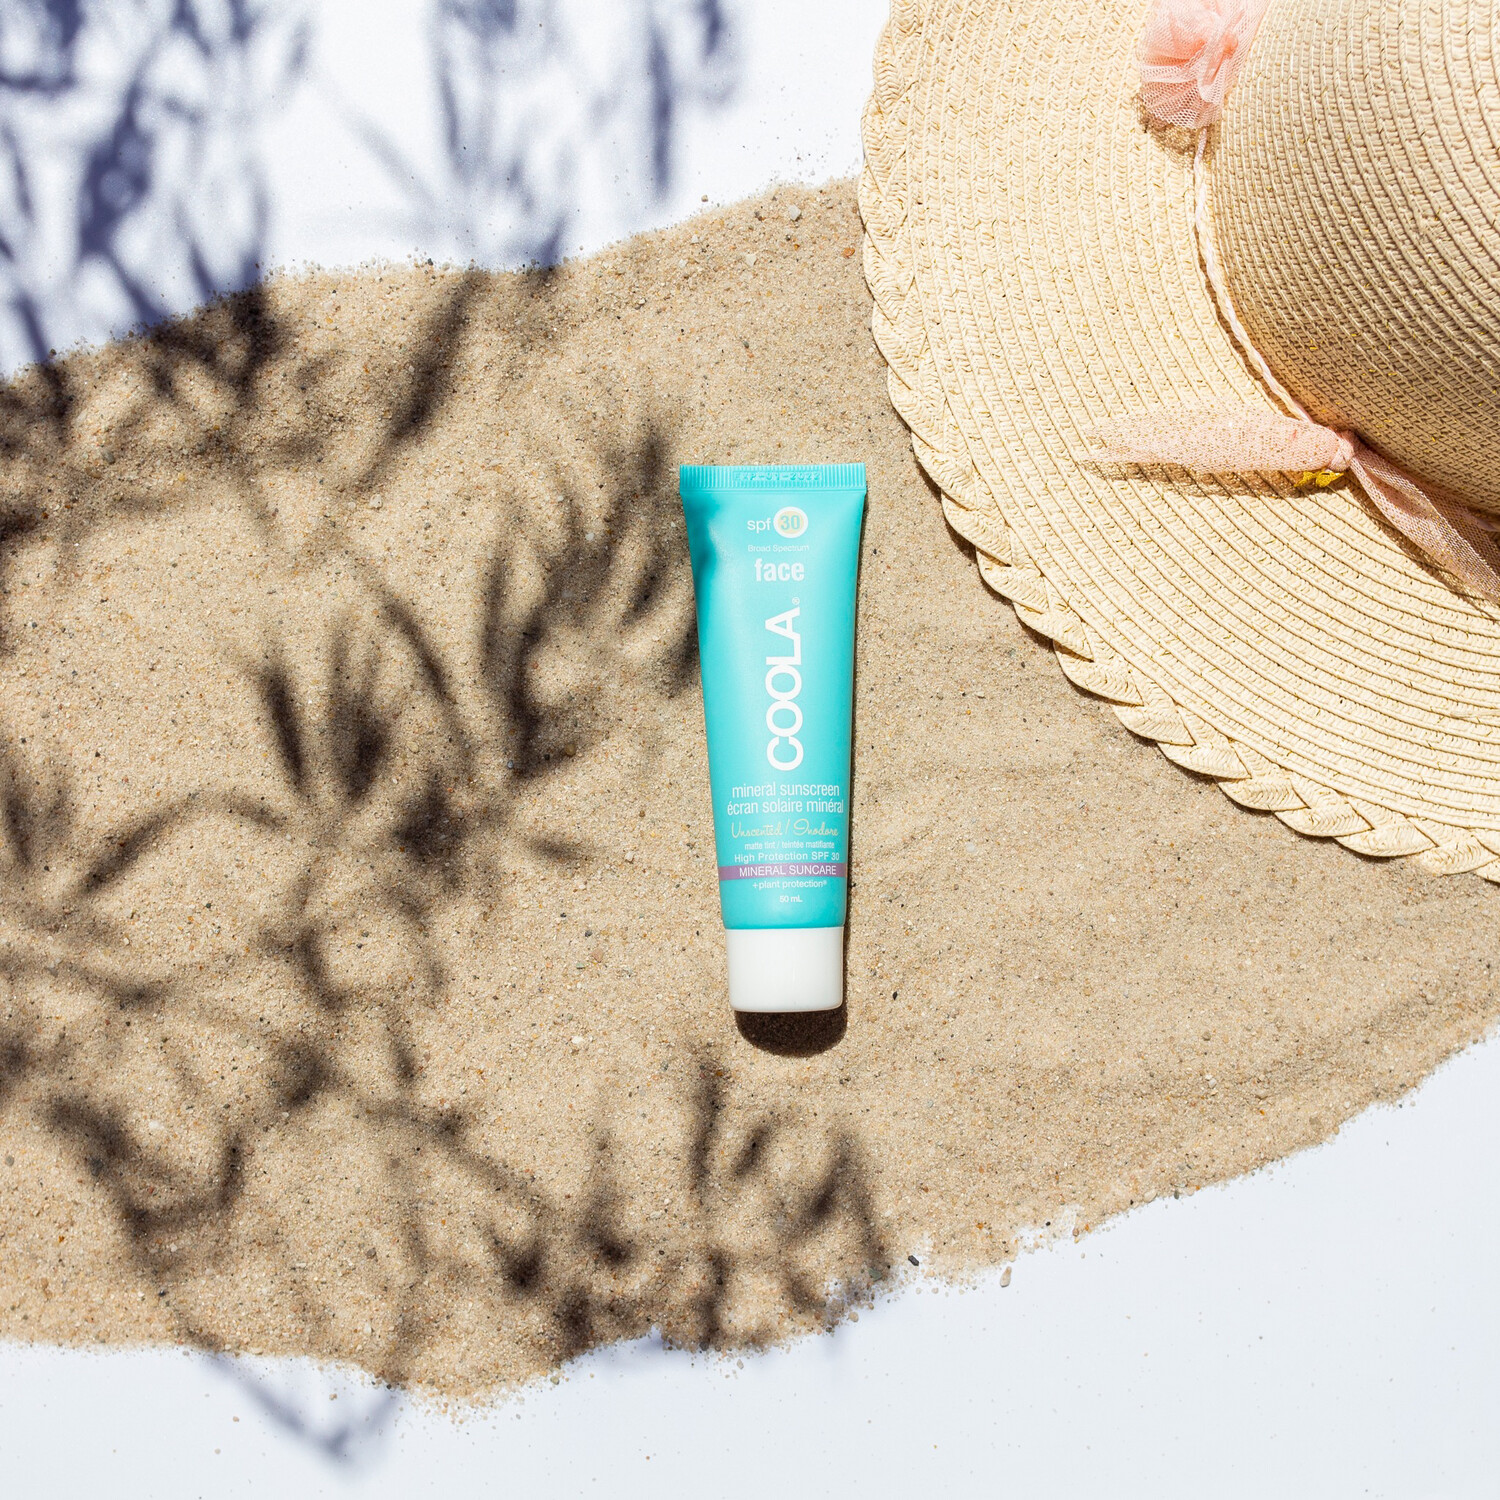 Coola sunscreen face moisturizing unscented SPF30 50ml